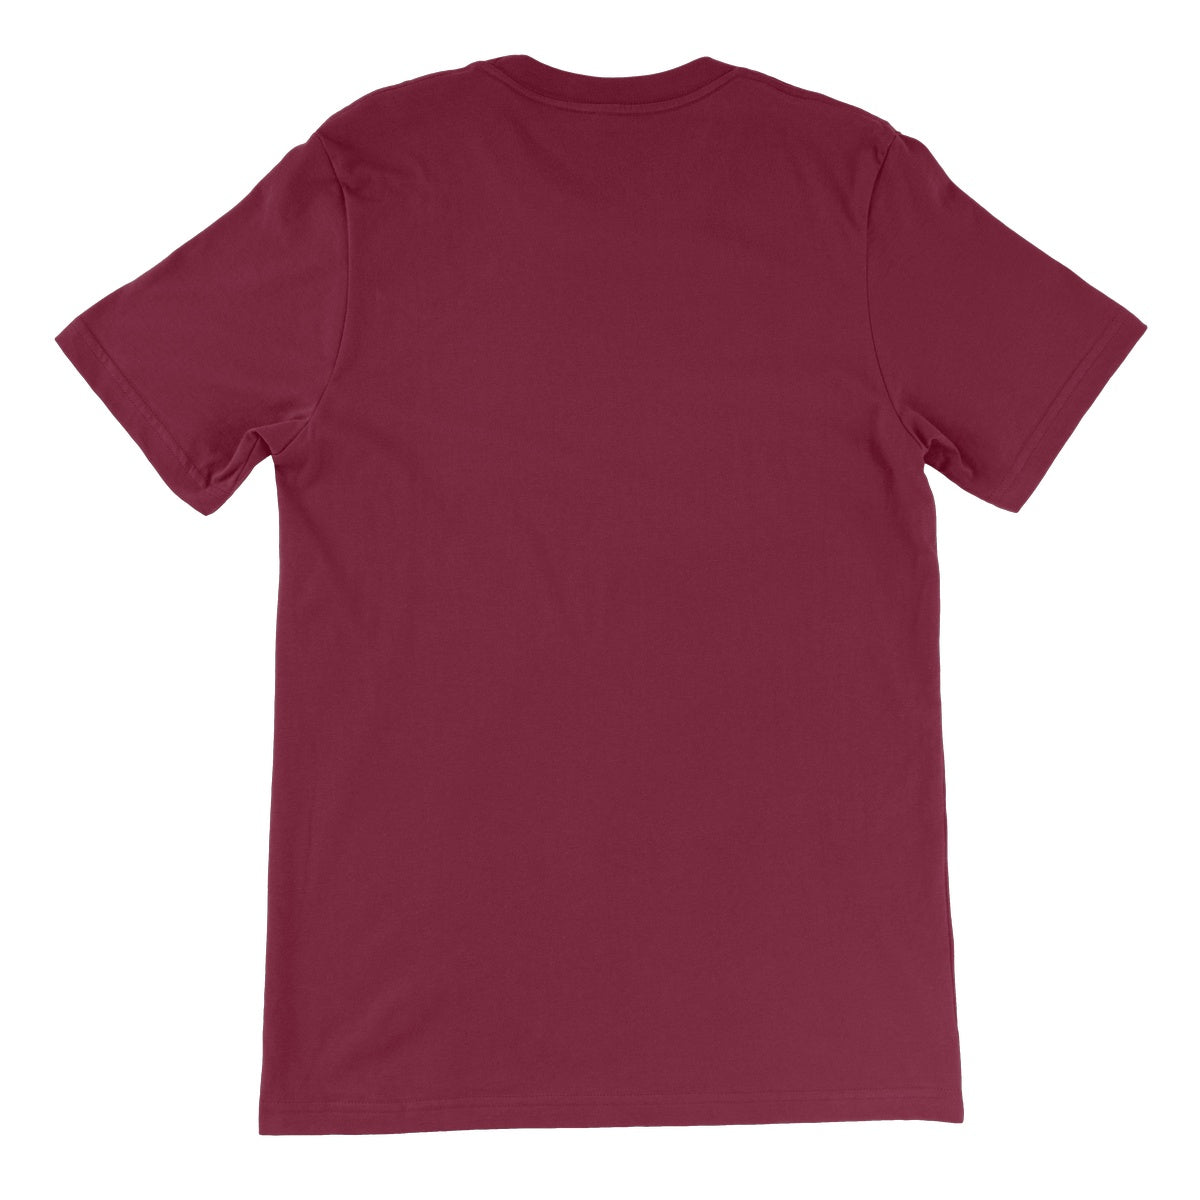 Peaceful River Farm Tee Unisex Short Sleeve T-Shirt